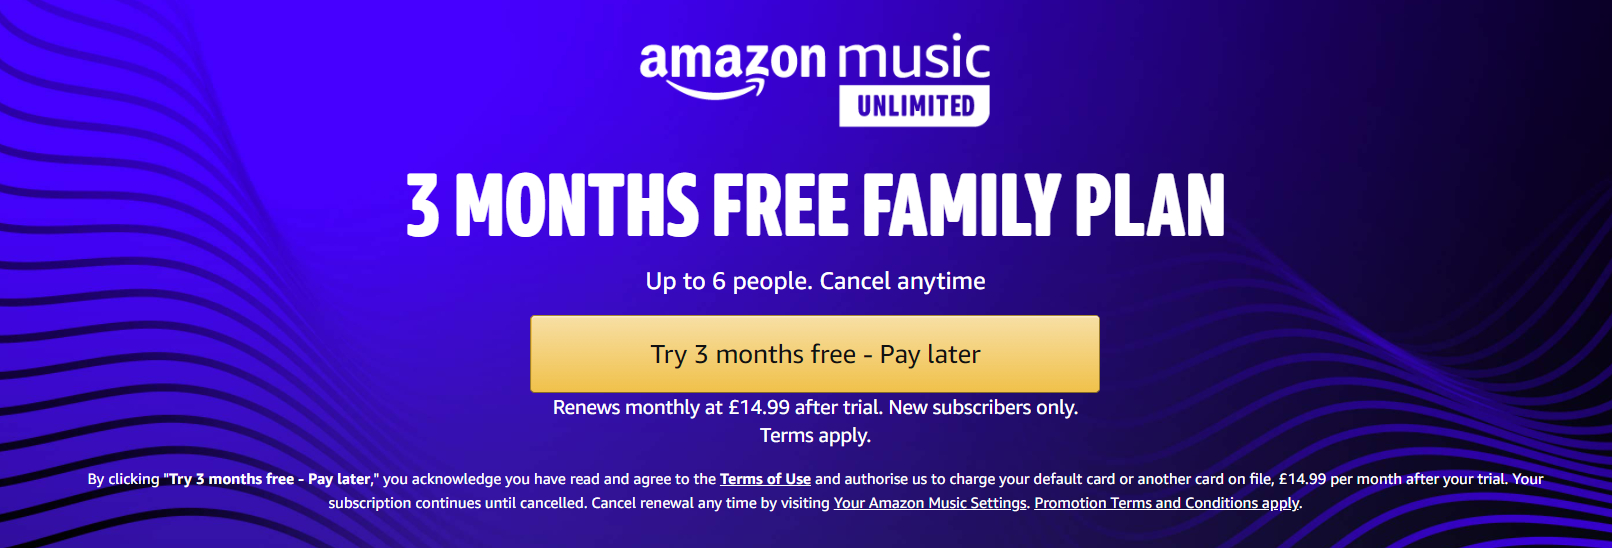 amazon music family plan